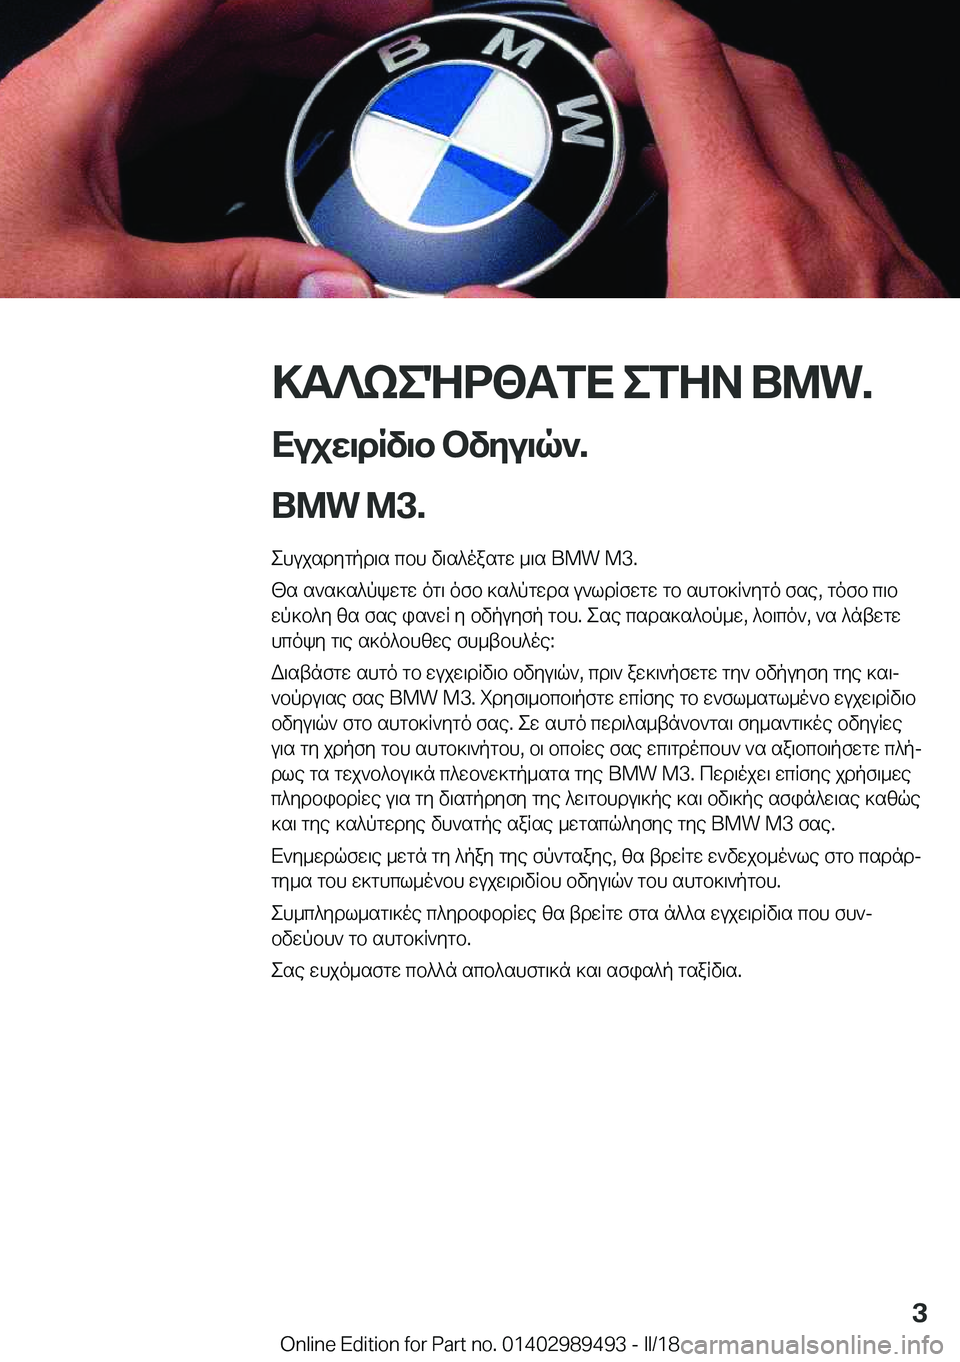 BMW M3 2018  ΟΔΗΓΌΣ ΧΡΉΣΗΣ (in Greek) >T?keNd<TfX�efZA��B�M�W�.
Xujw\dRv\b�bvZu\q`�.
�B�M�W��M�3�.  e h u j s d y g p d \ s�  c b h�  v \ s ^ o a s g w�  _ \ s� �B�M�W� �M�3�. [ s�  s ` s ] s ^ p k w g 